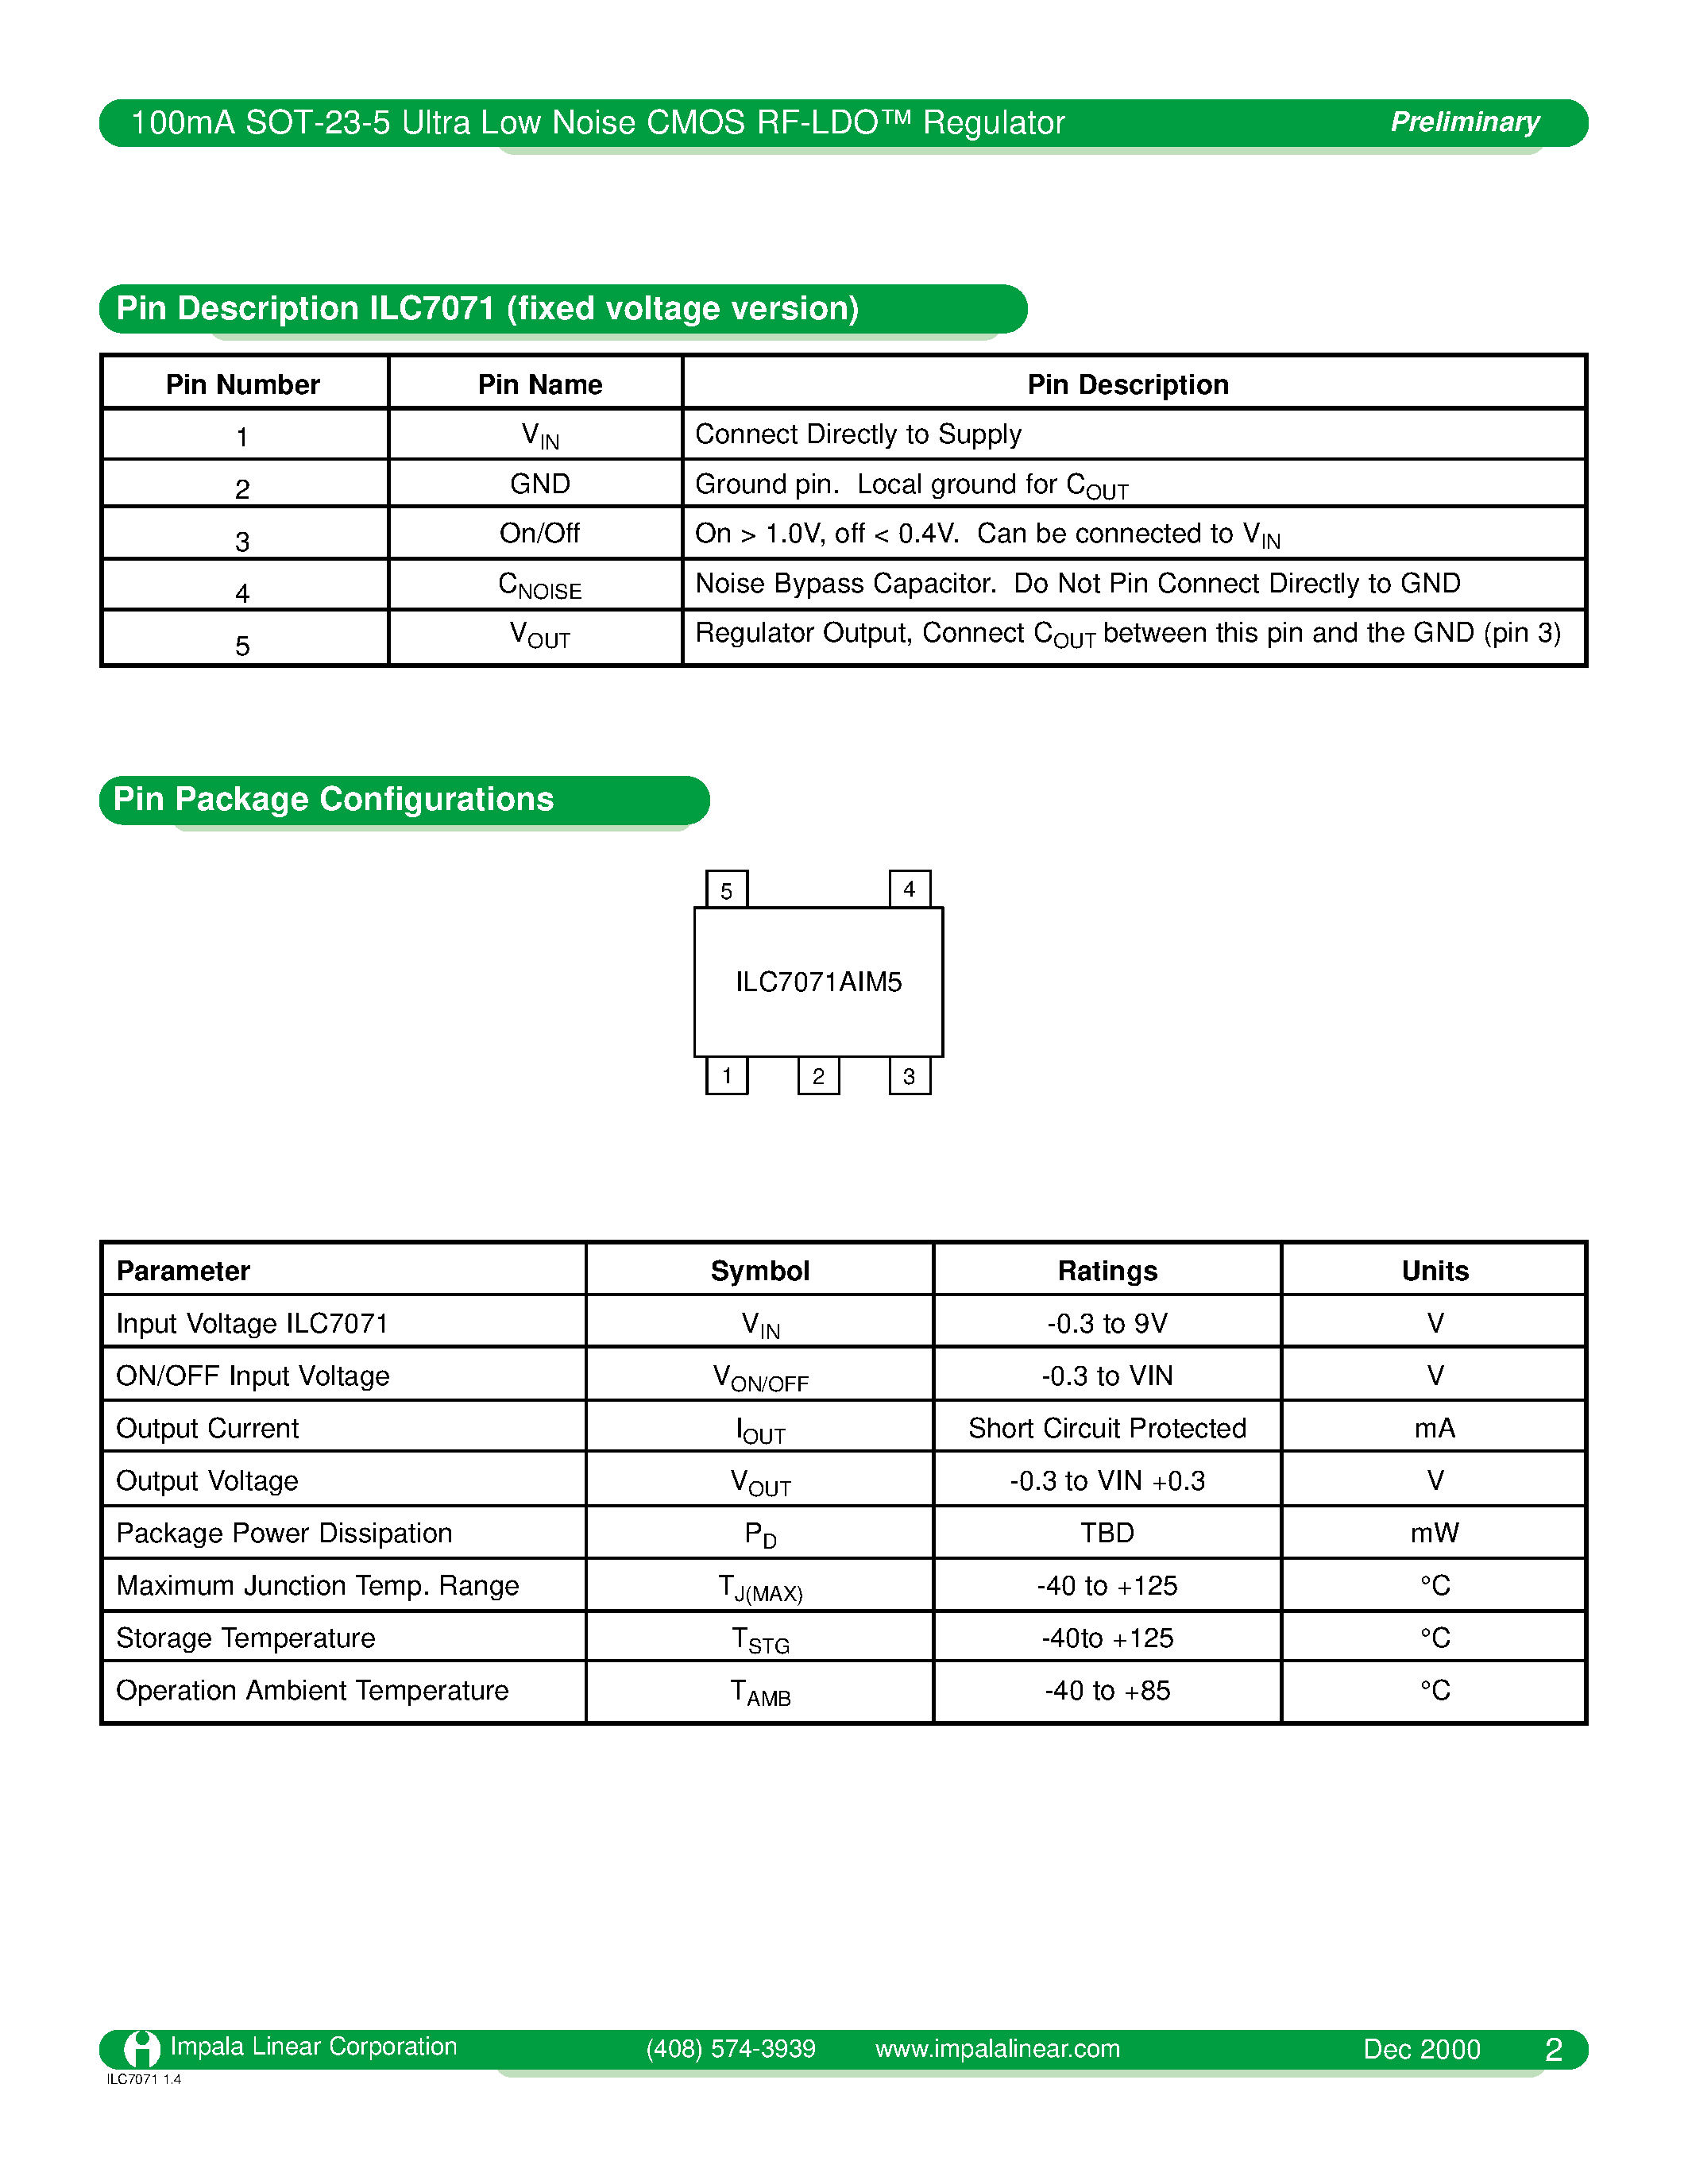 Datasheet ILC7071AIM5-50 - 100MA SOT-23-5 ULTRA LOW NOISE CMOS RF-LDO REGULATOR page 2